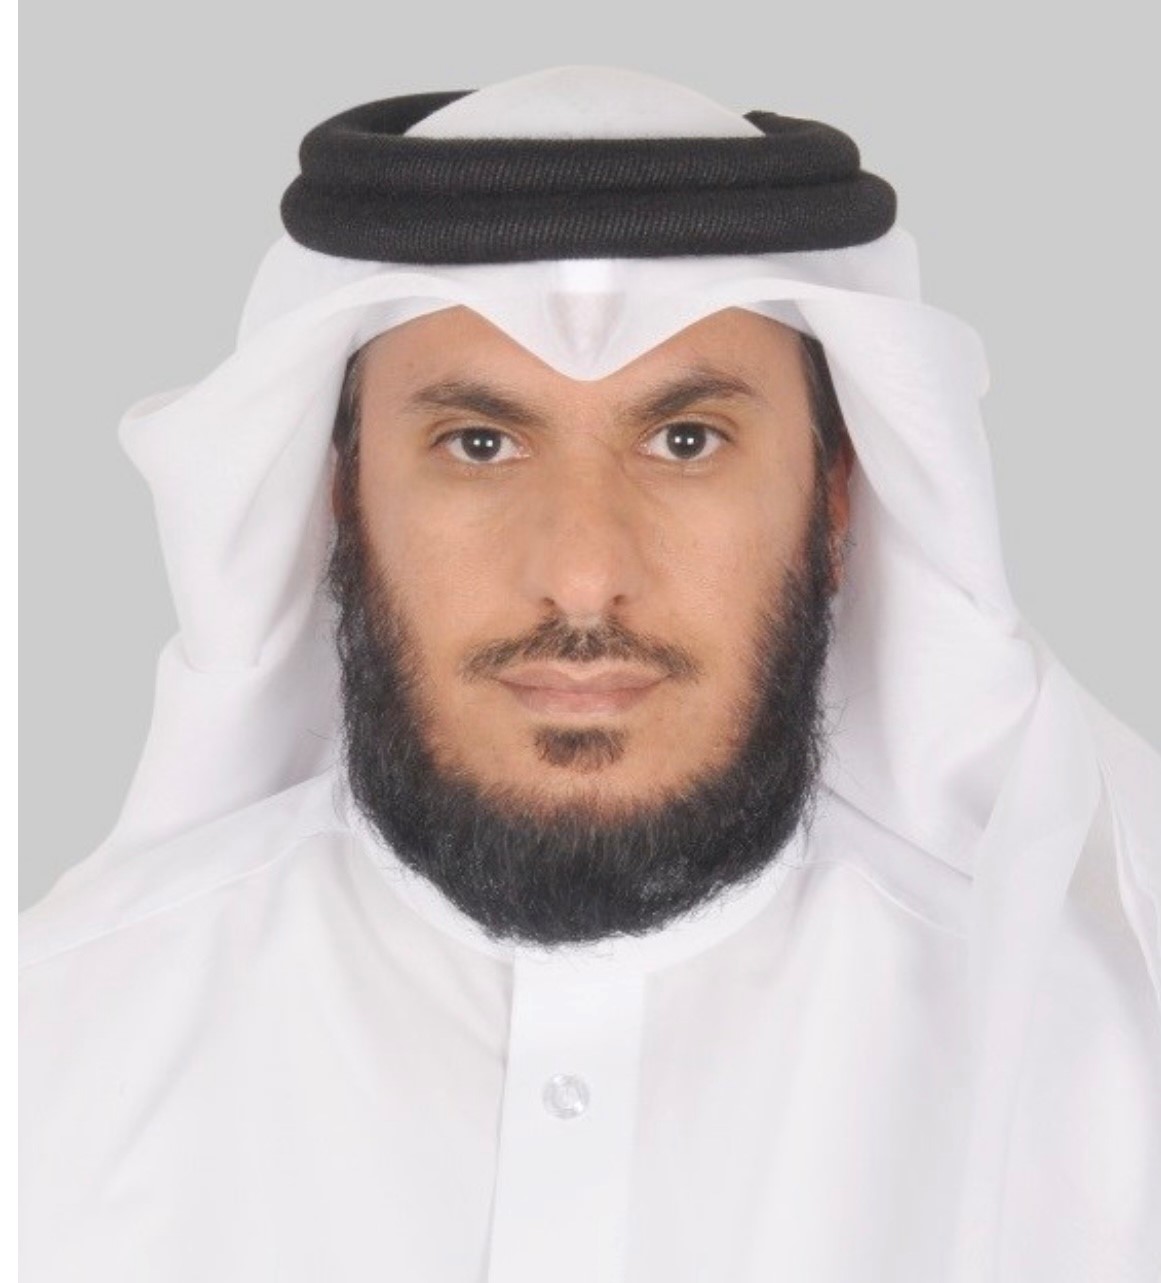 Mr. Mohammed Ali Al-Ghamdi